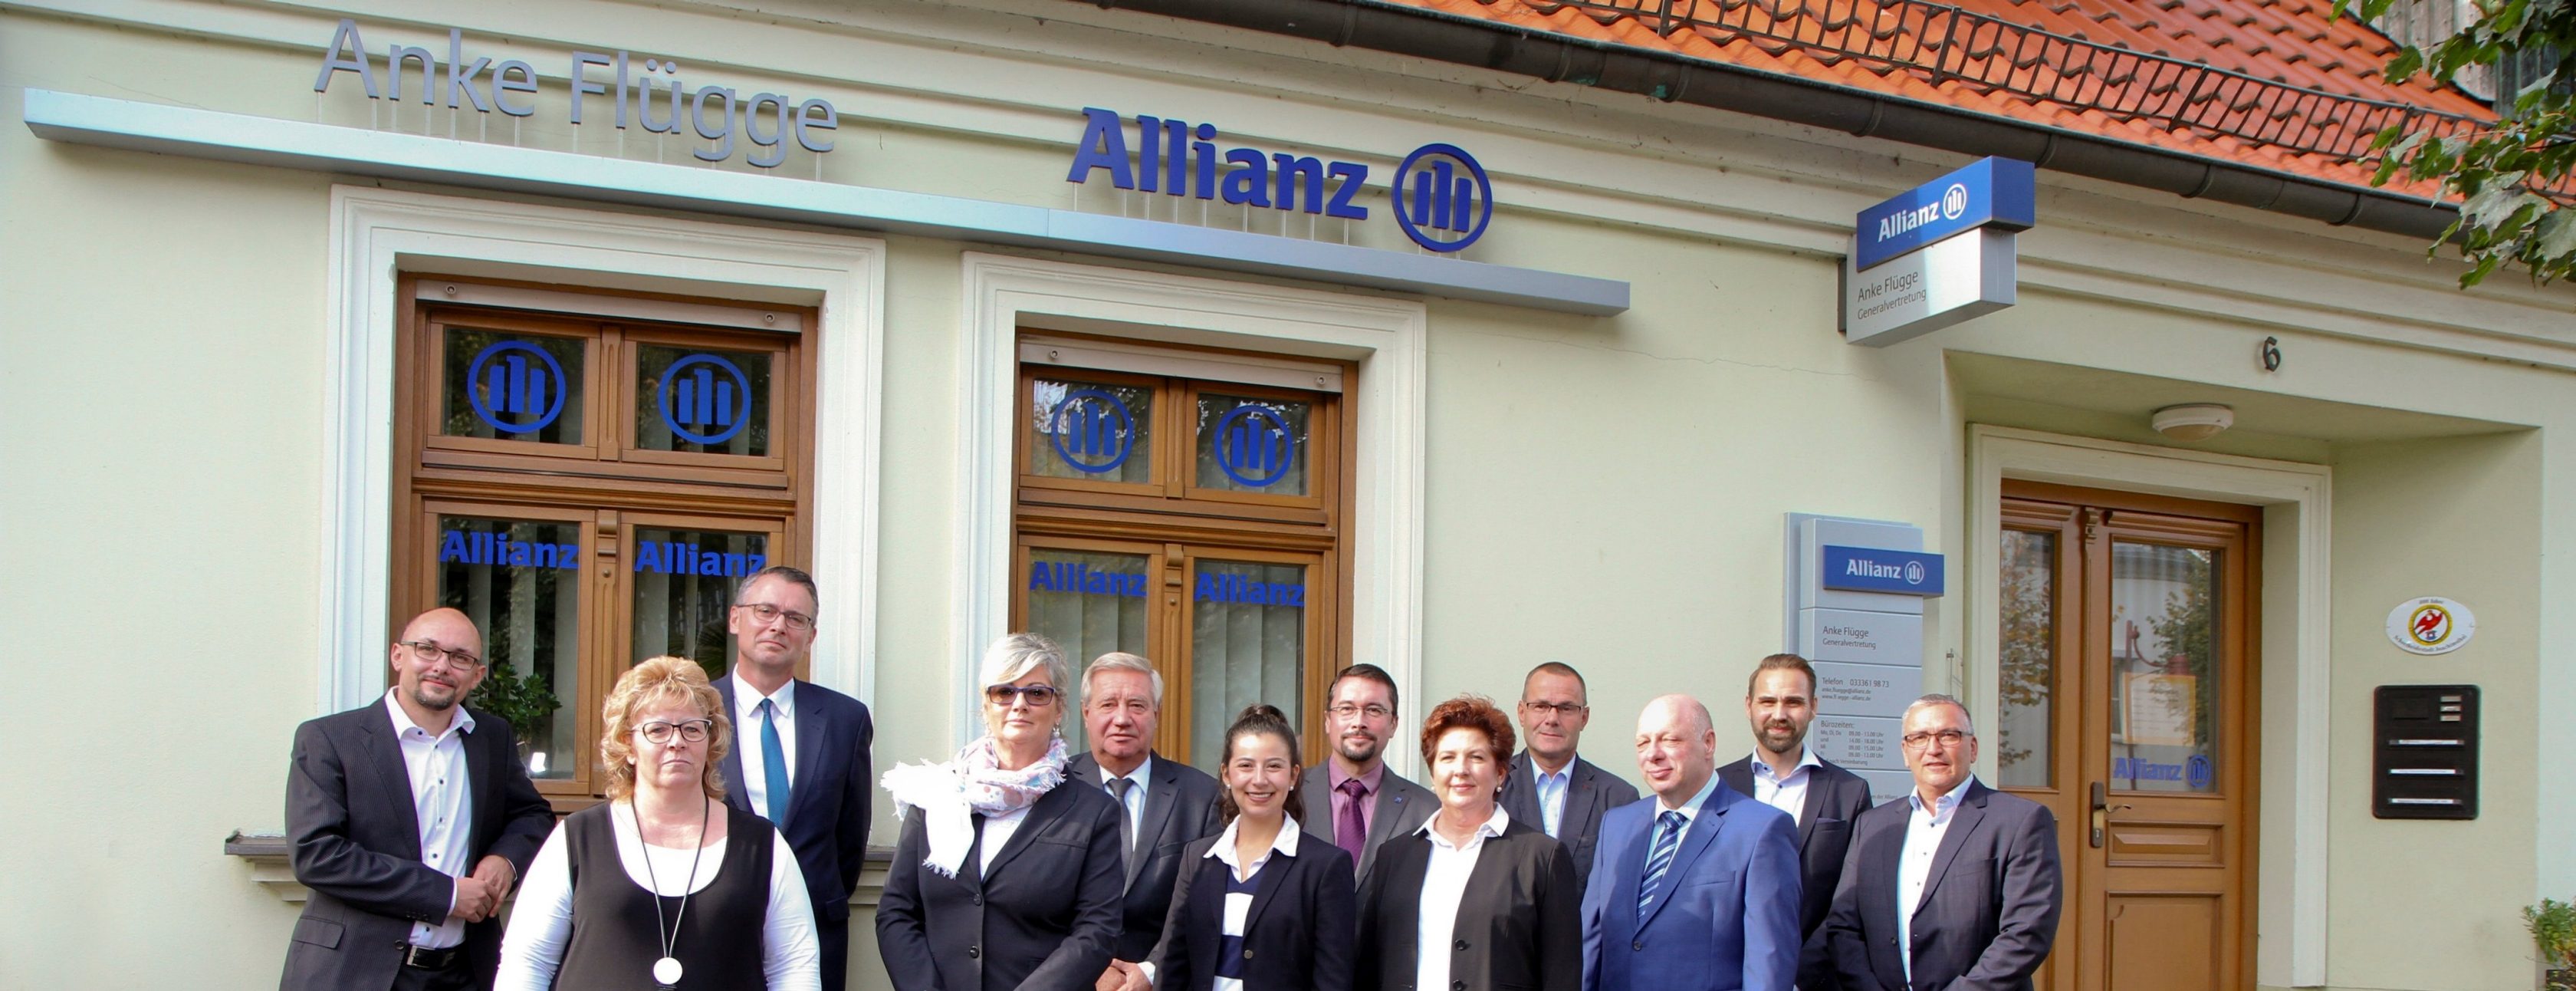 Allianz Versicherung Anke Flügge Joachimsthal - Agentur Anke Flügge Allianz Joachimsthal Team